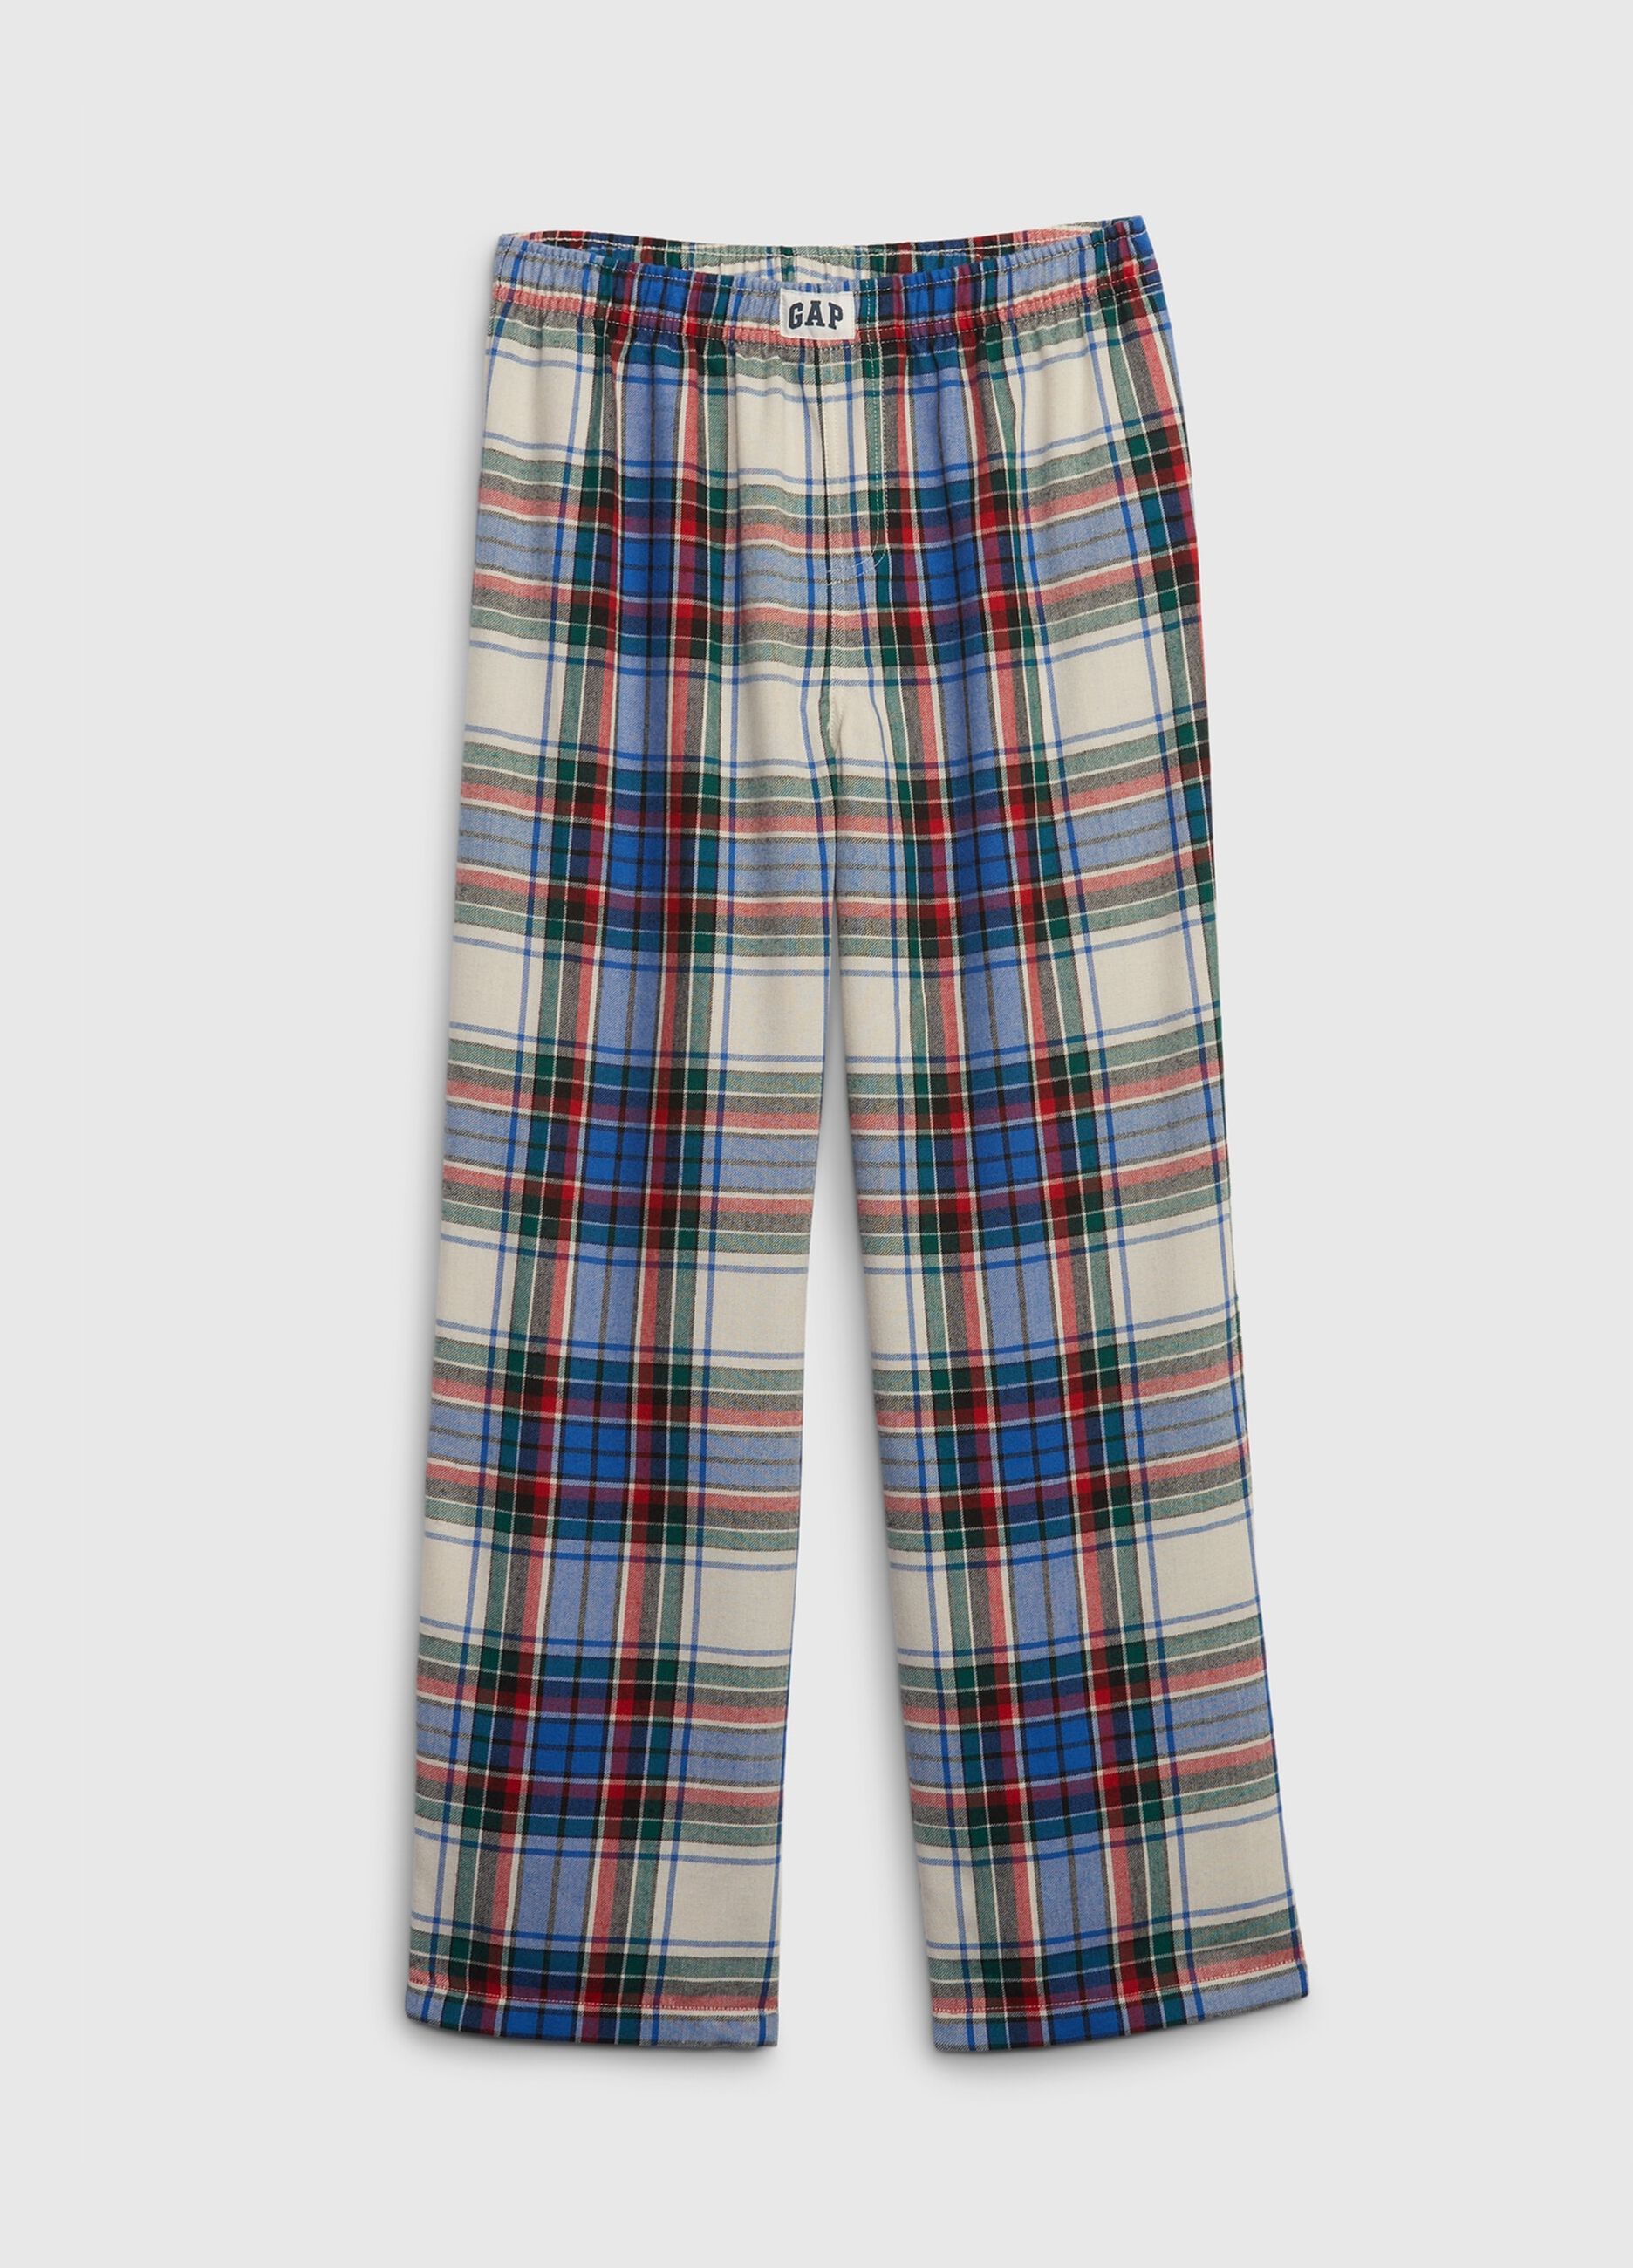 Tartan pyjama bottoms in flannel